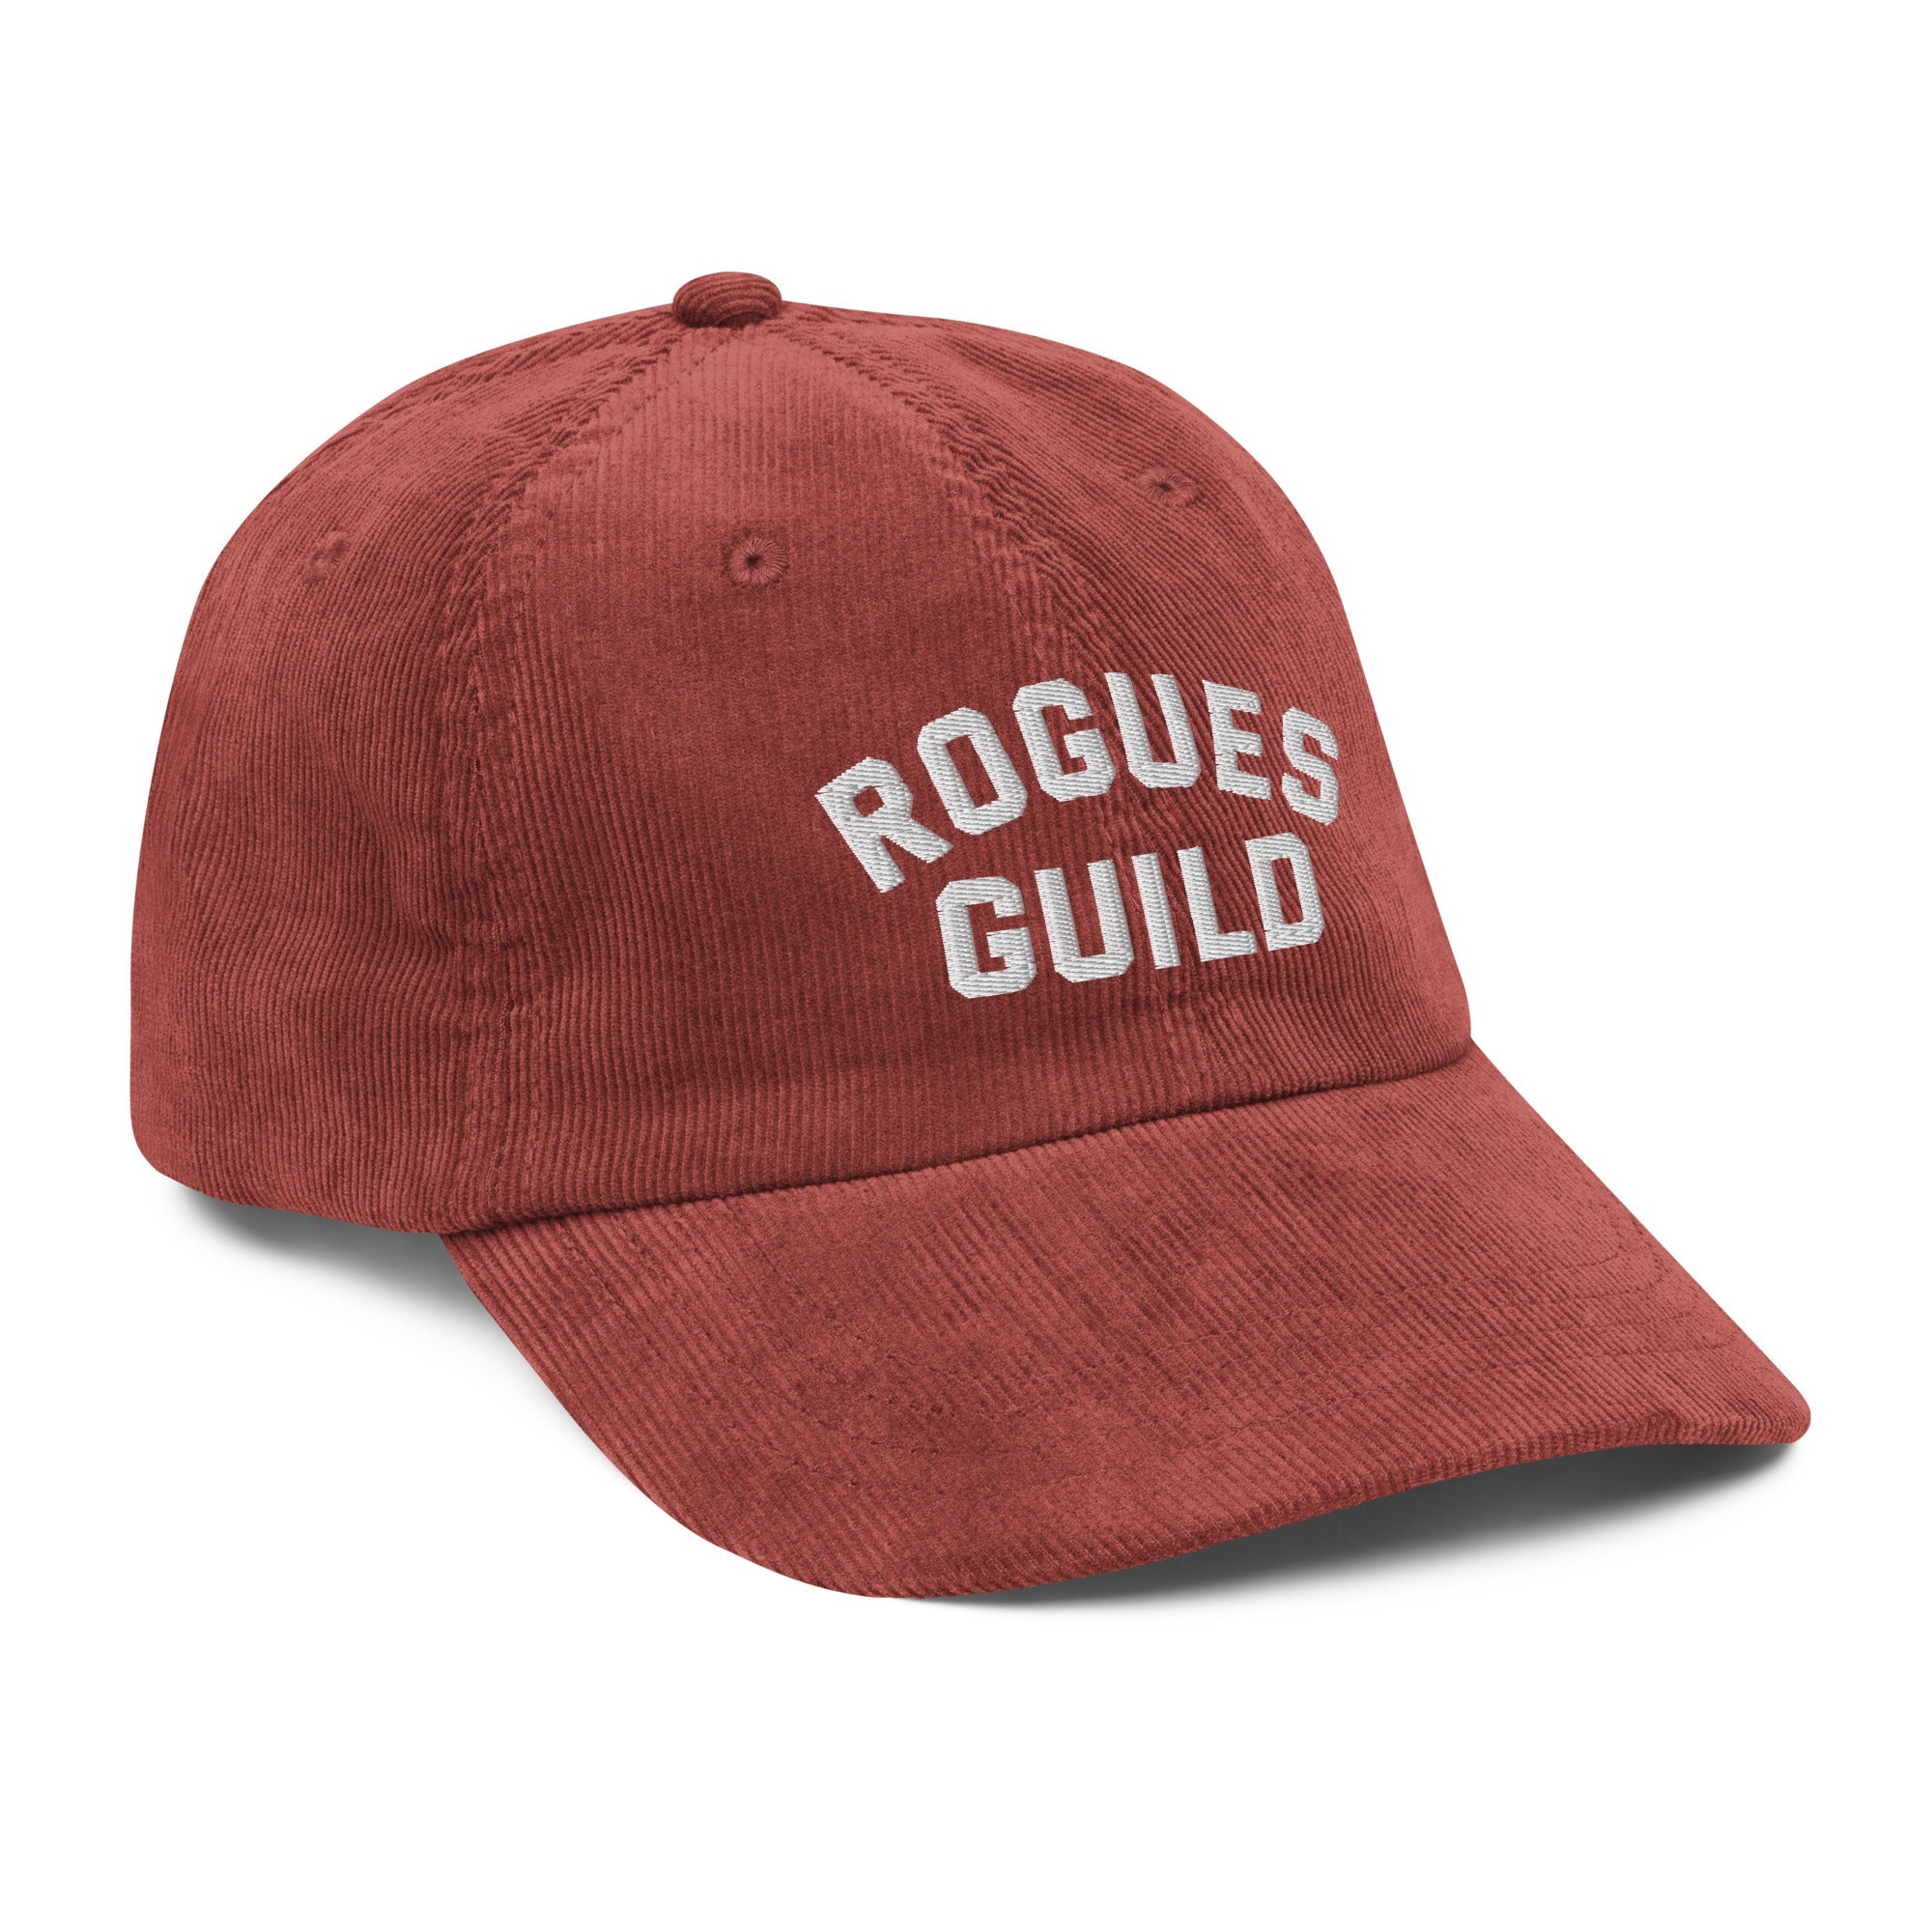 Rogue | corduroy cap - Ace of Gnomes - 4640120_16419